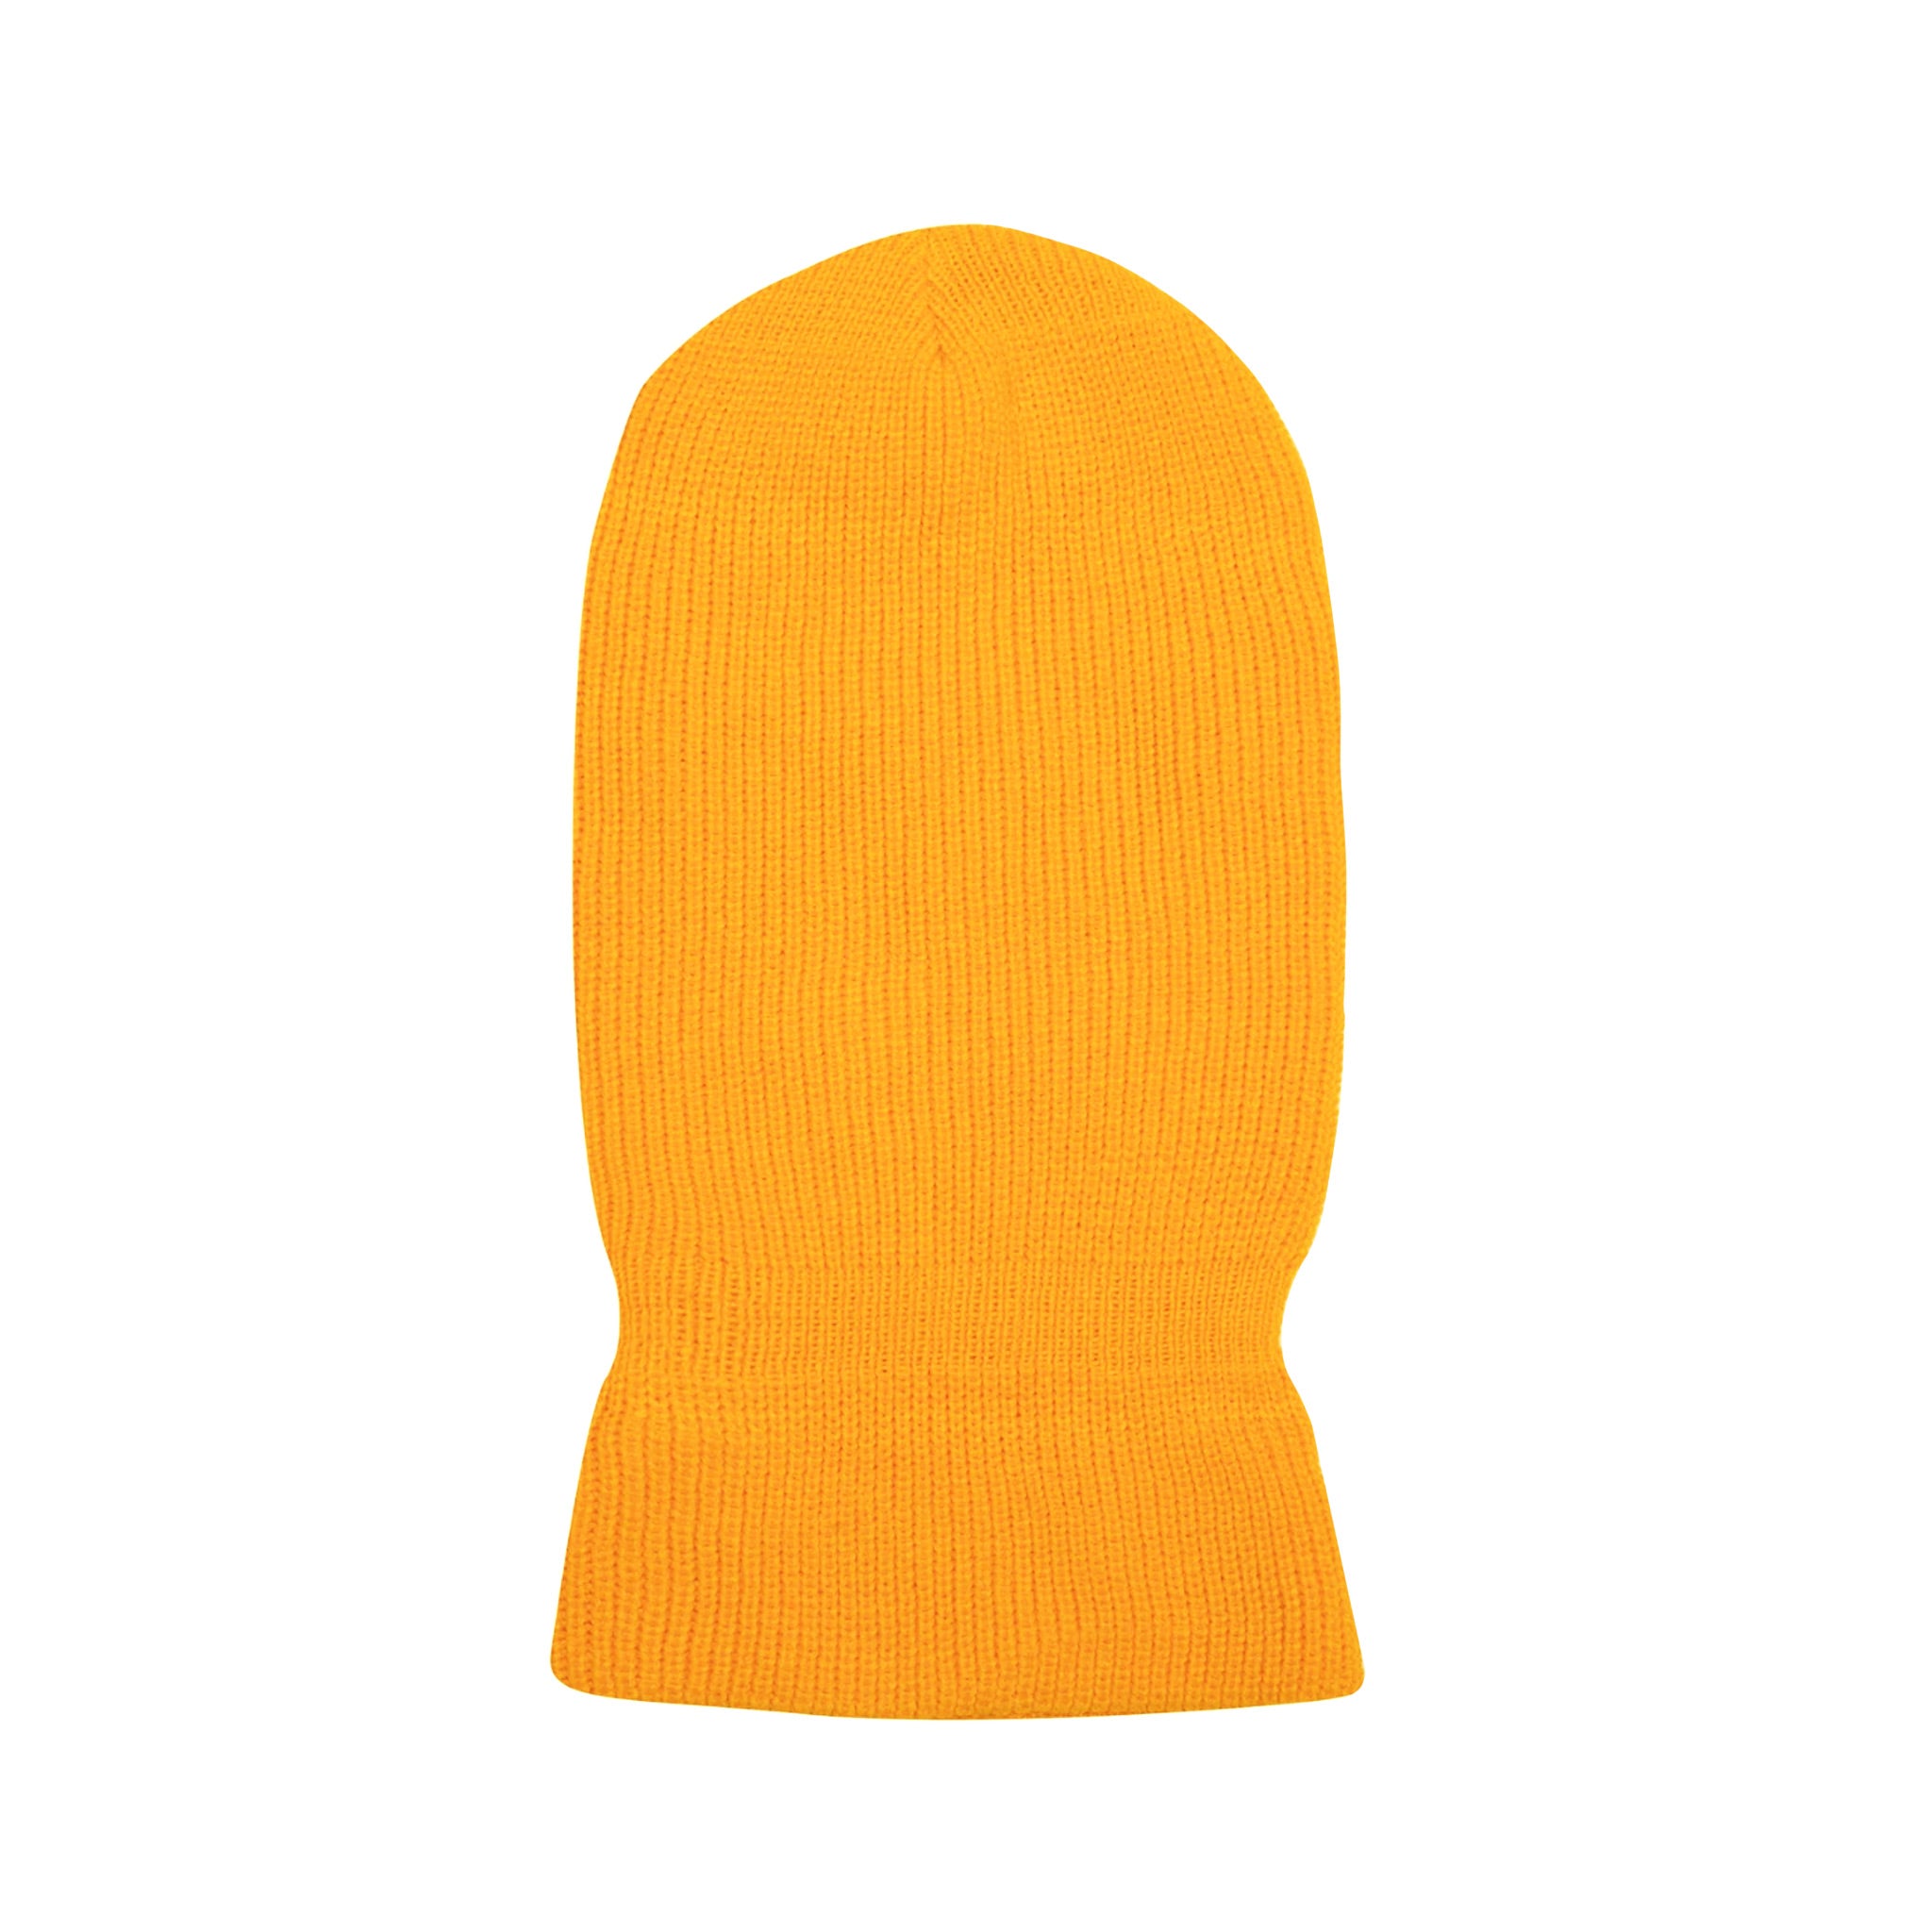 Drew House Knitted Ski-Mask - Golden Yellow | Australia New Zealand BACK